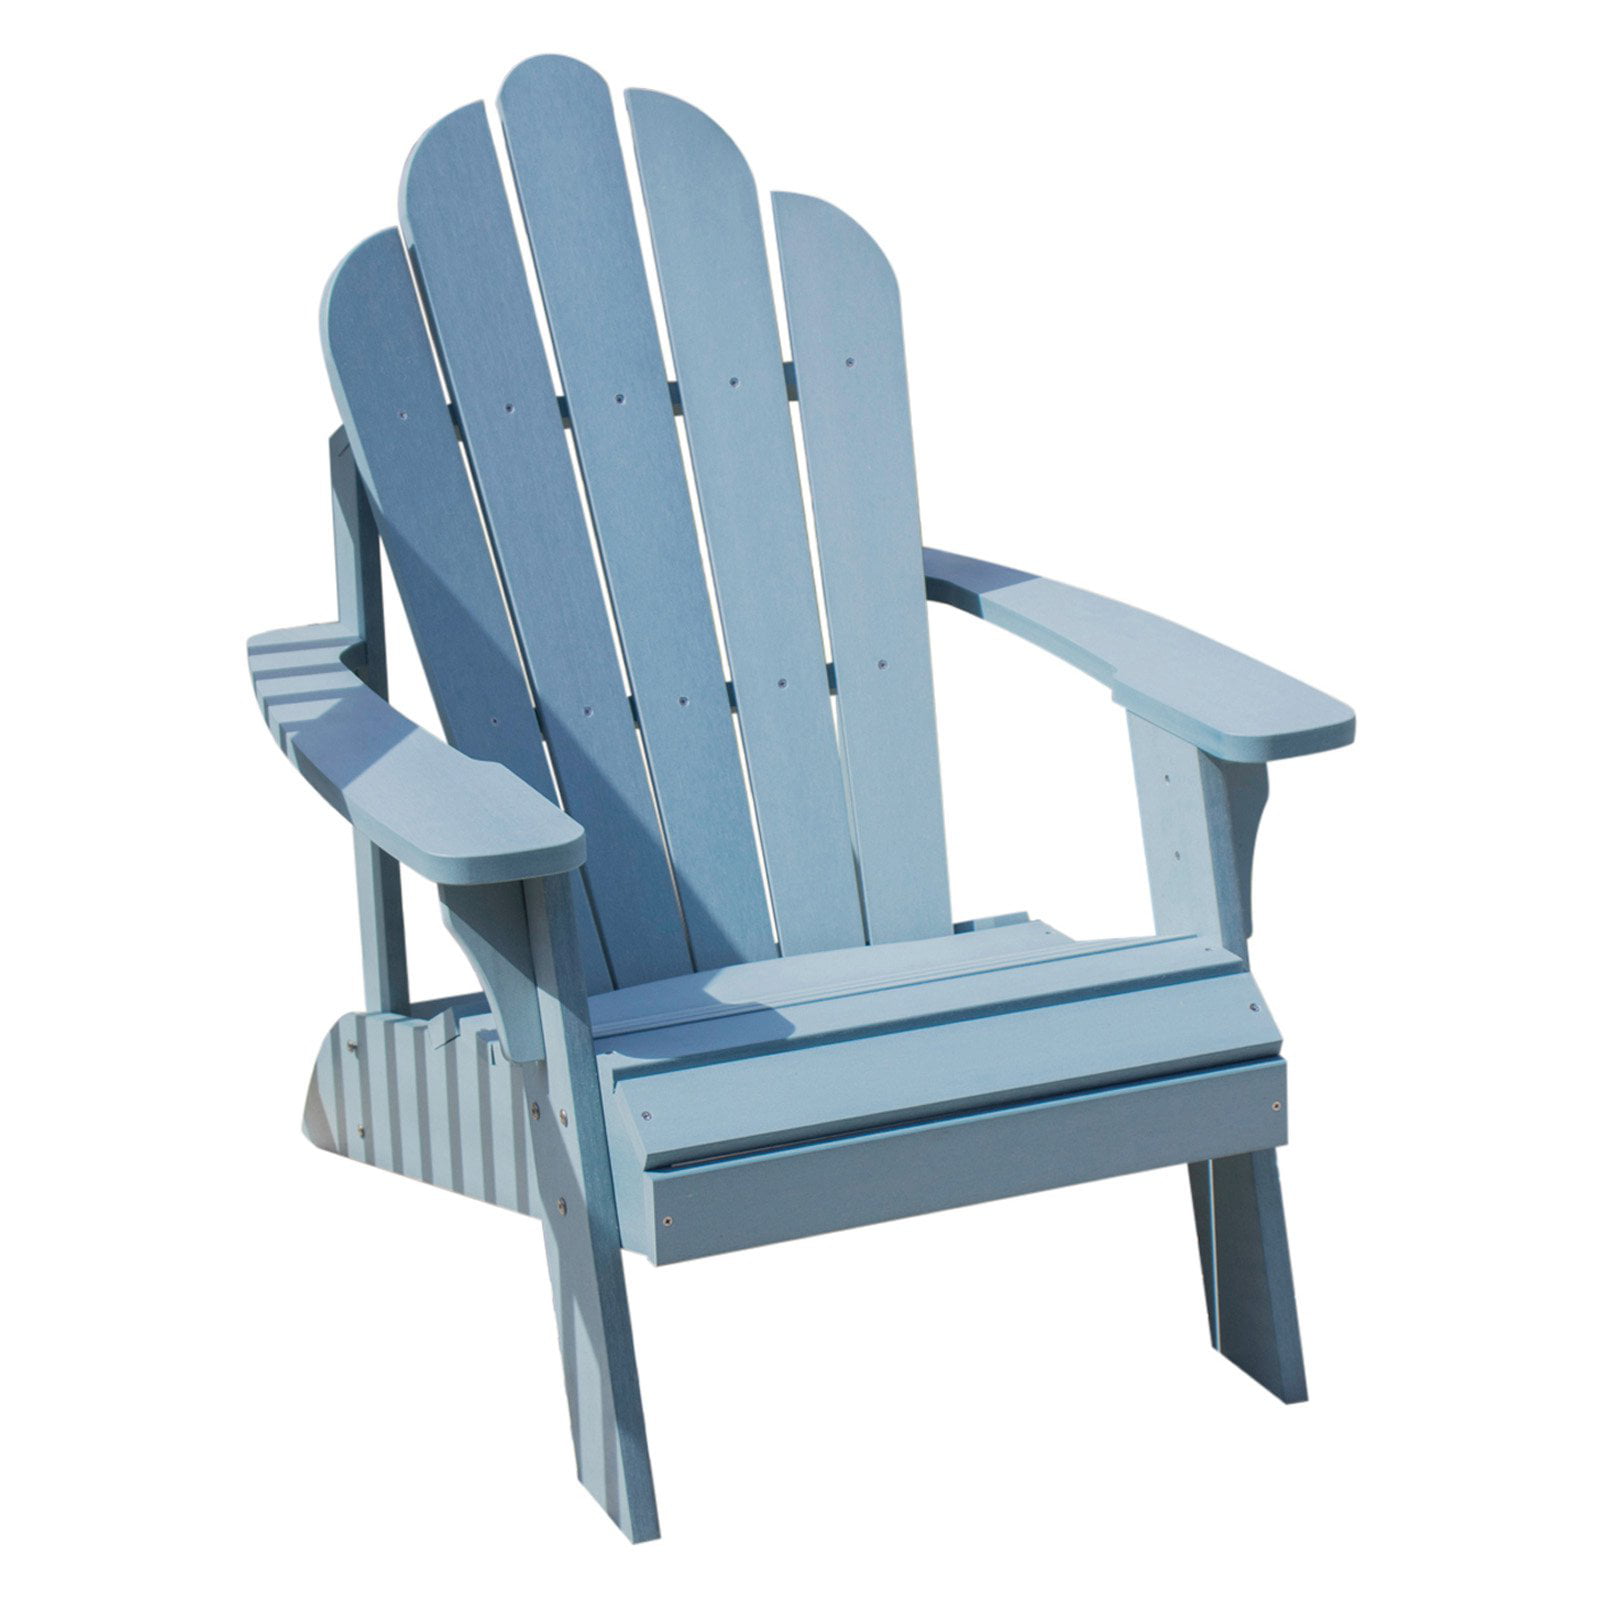 Composite Wood Outdoor Adirondack Chair - Teal Blue - Walmart.com